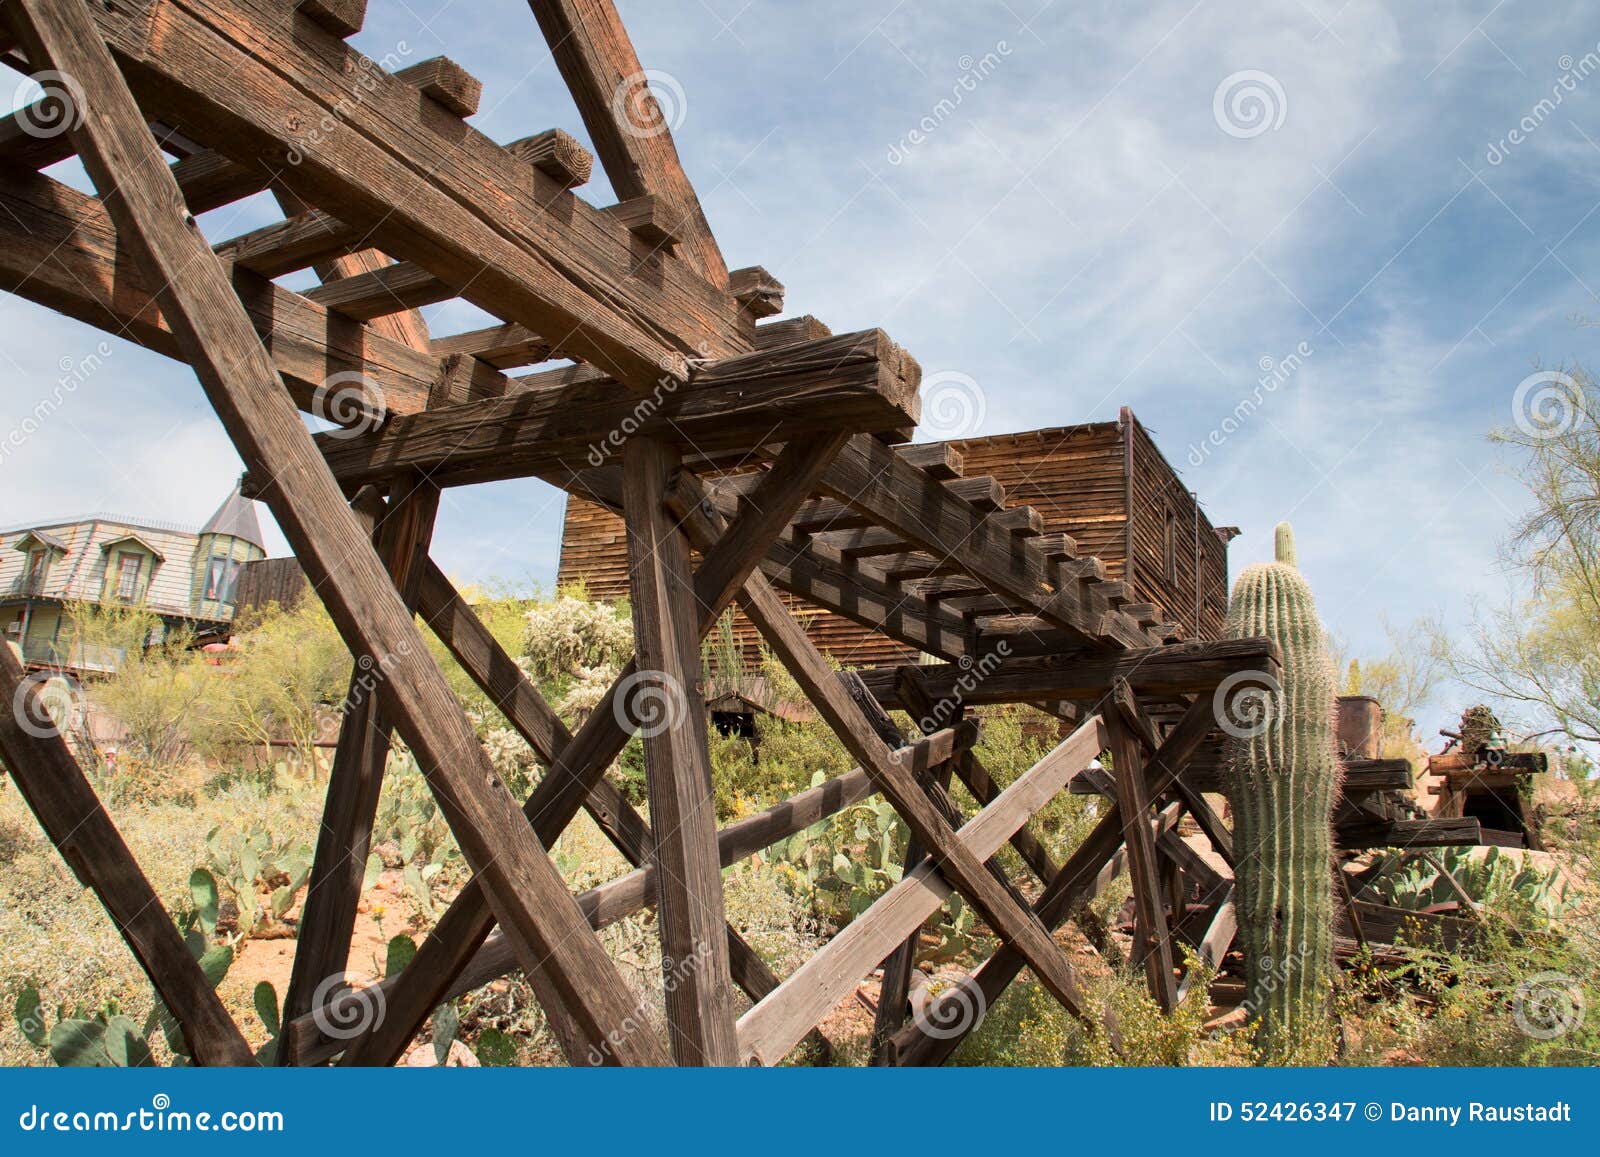 old wild west arizona town gold mine trestle bridge